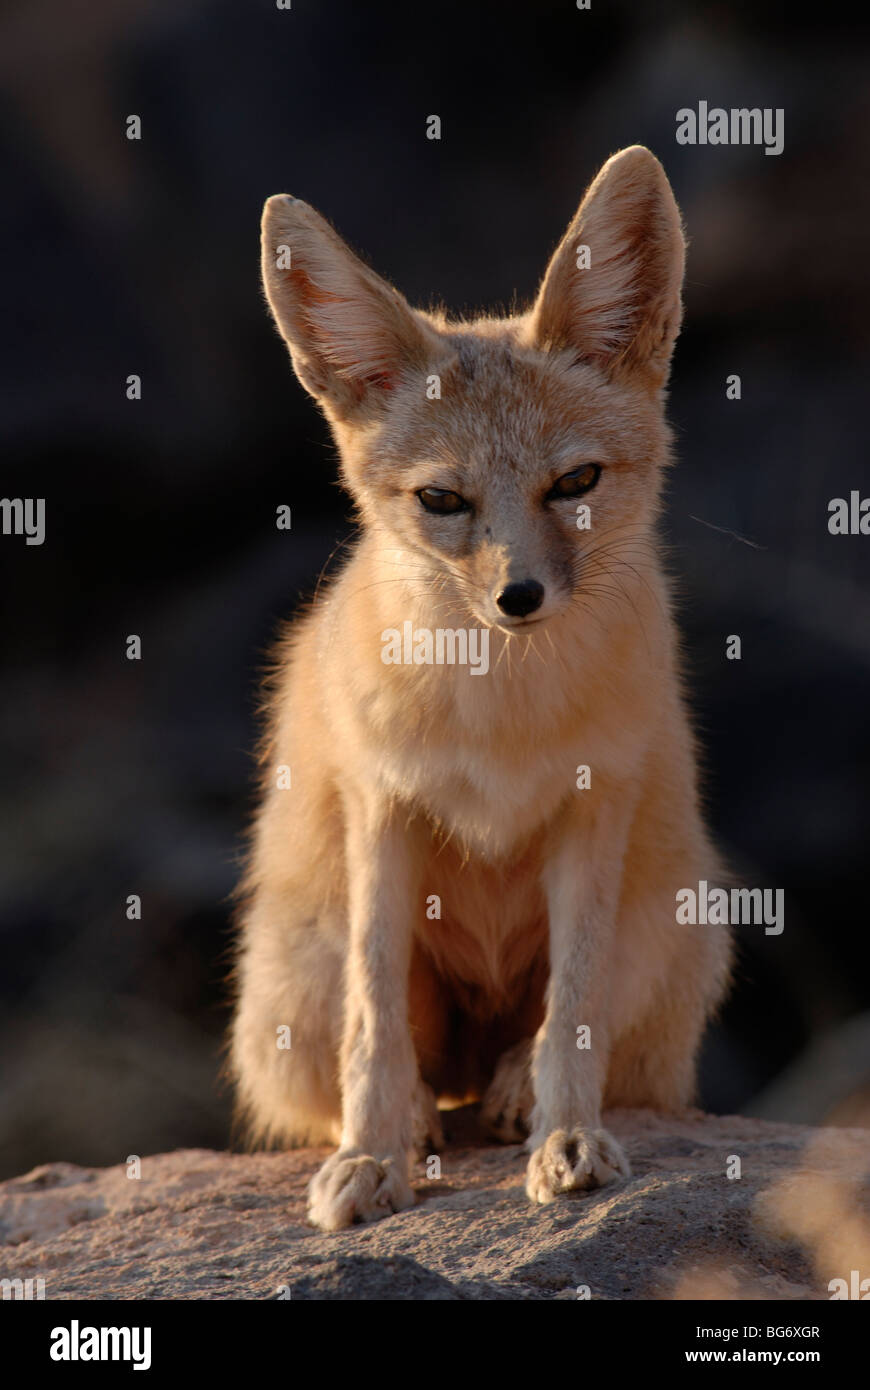 Stock photo of a kit fox sitting on a rock in golden light, southwestern Utah. Stock Photo